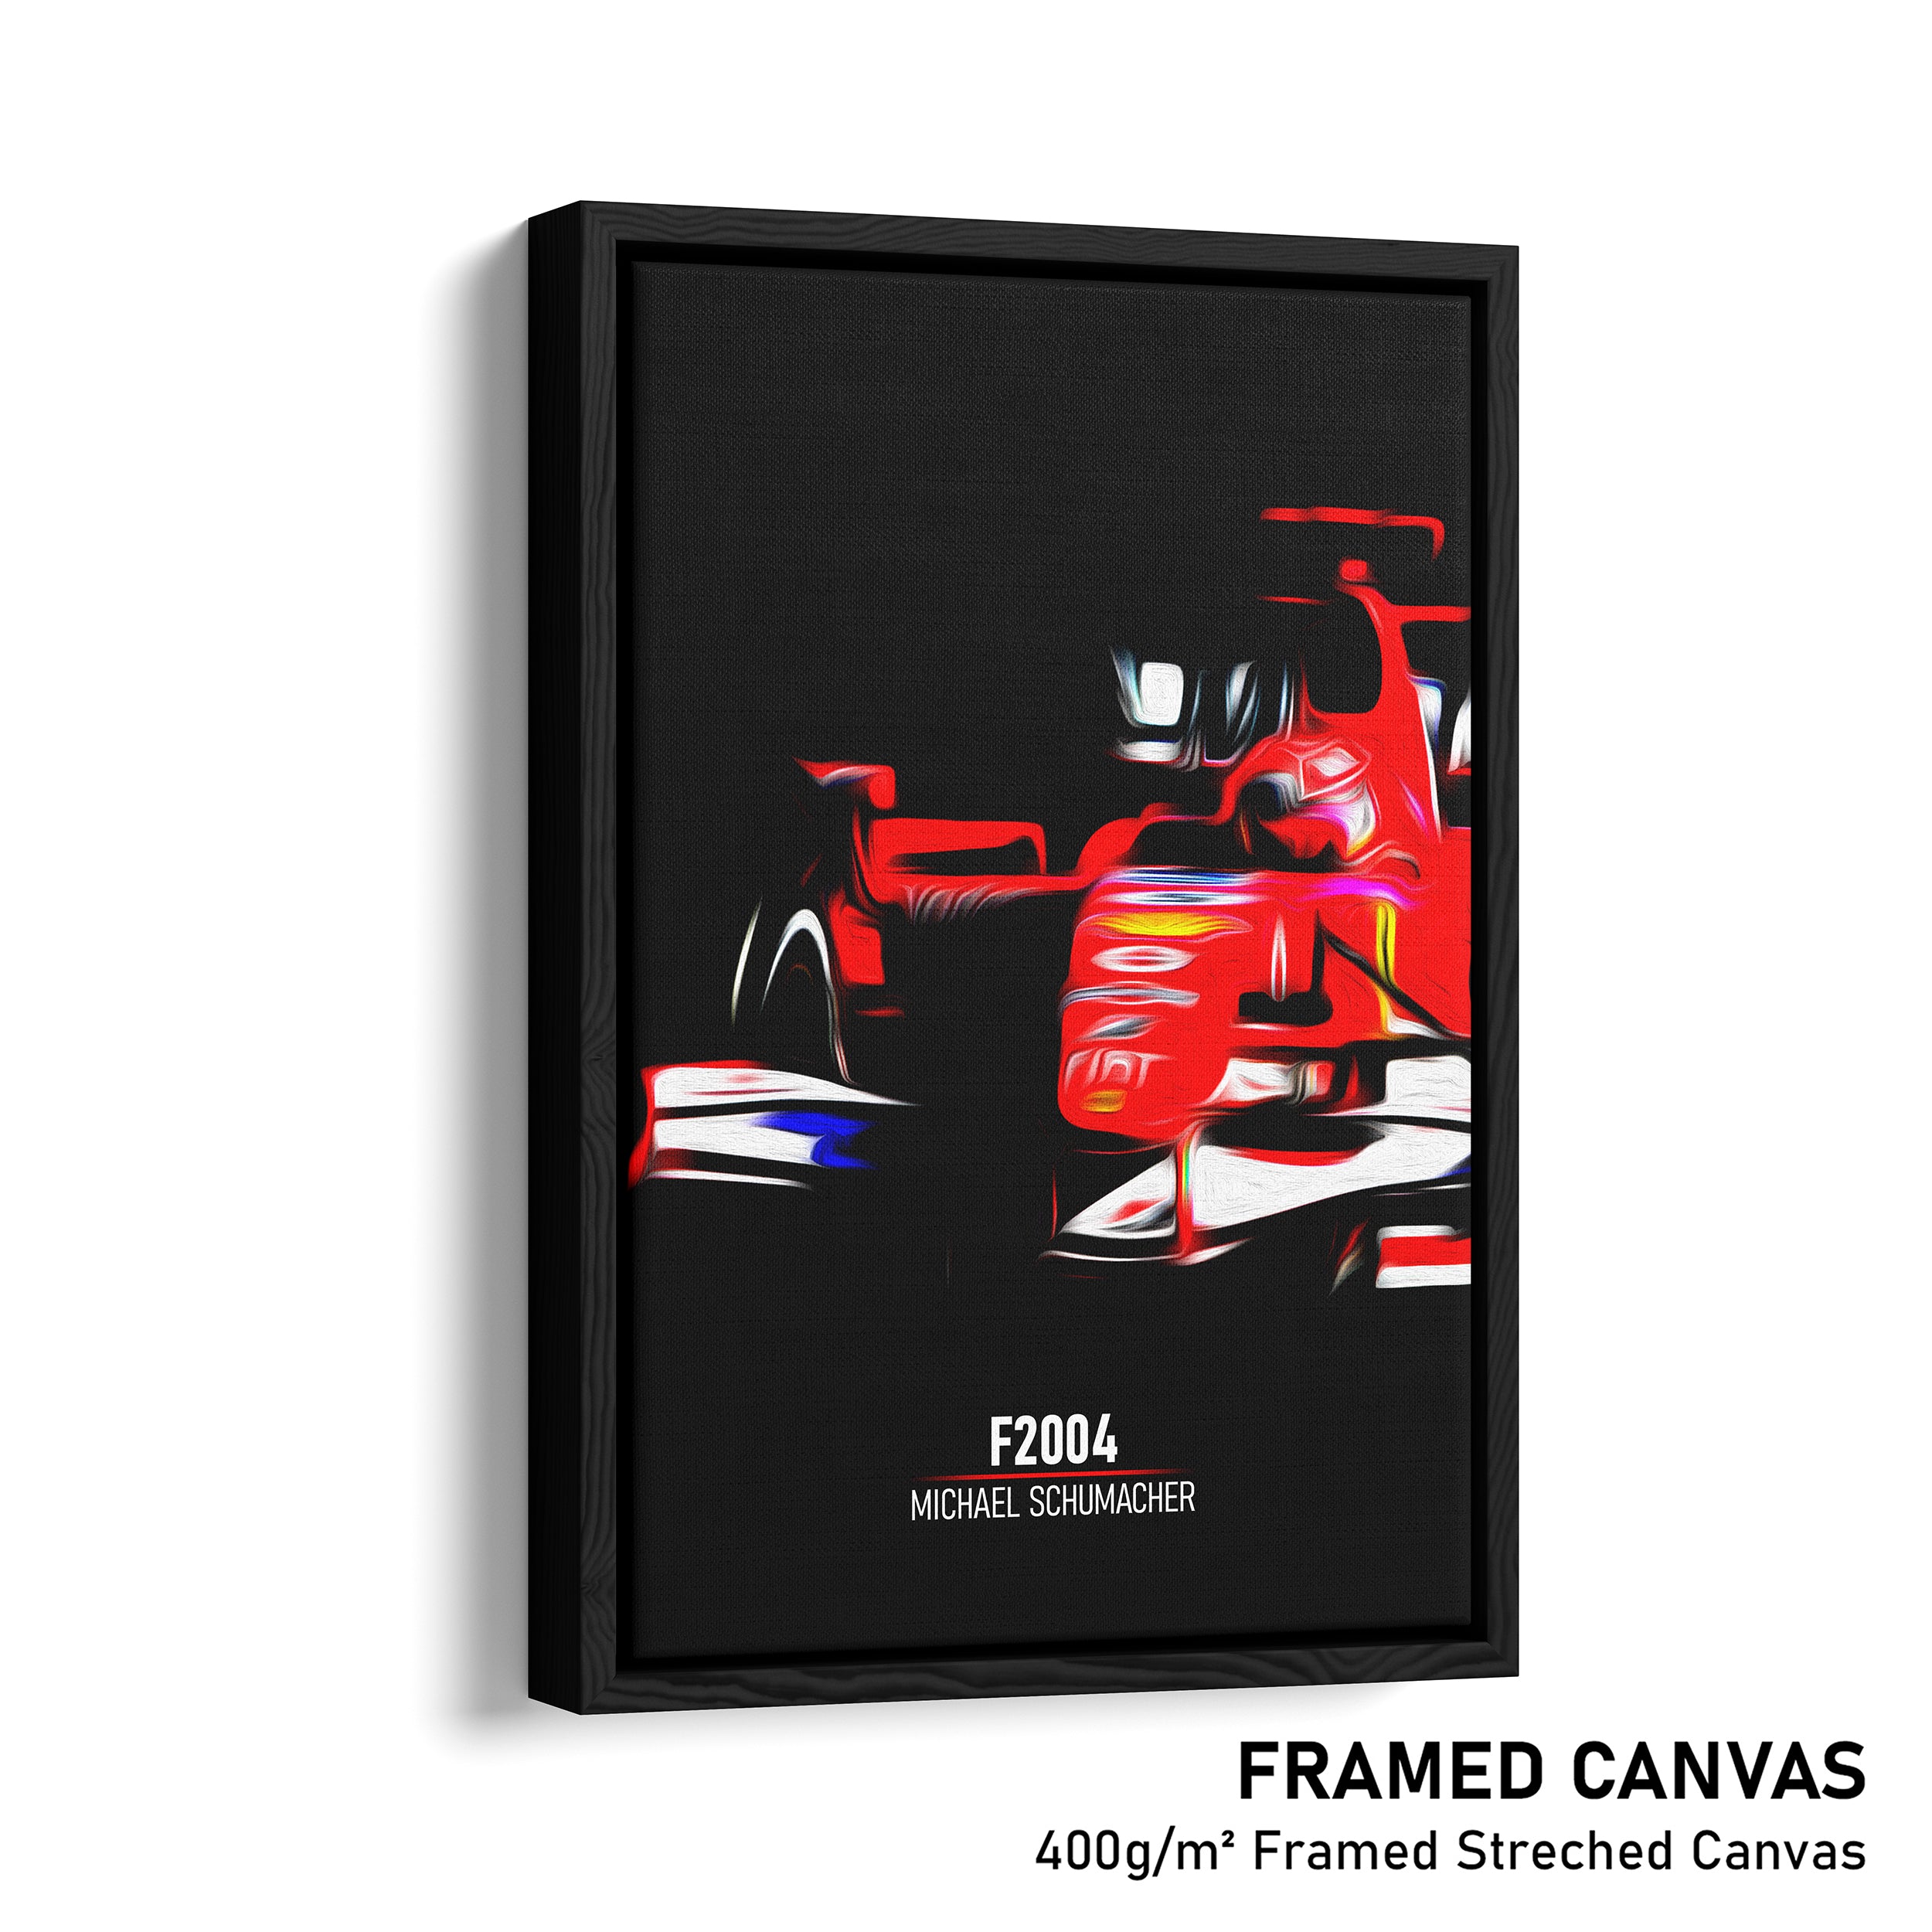 Ferrari F2004, Michael Schumacher 2004 - Formula 1 Print